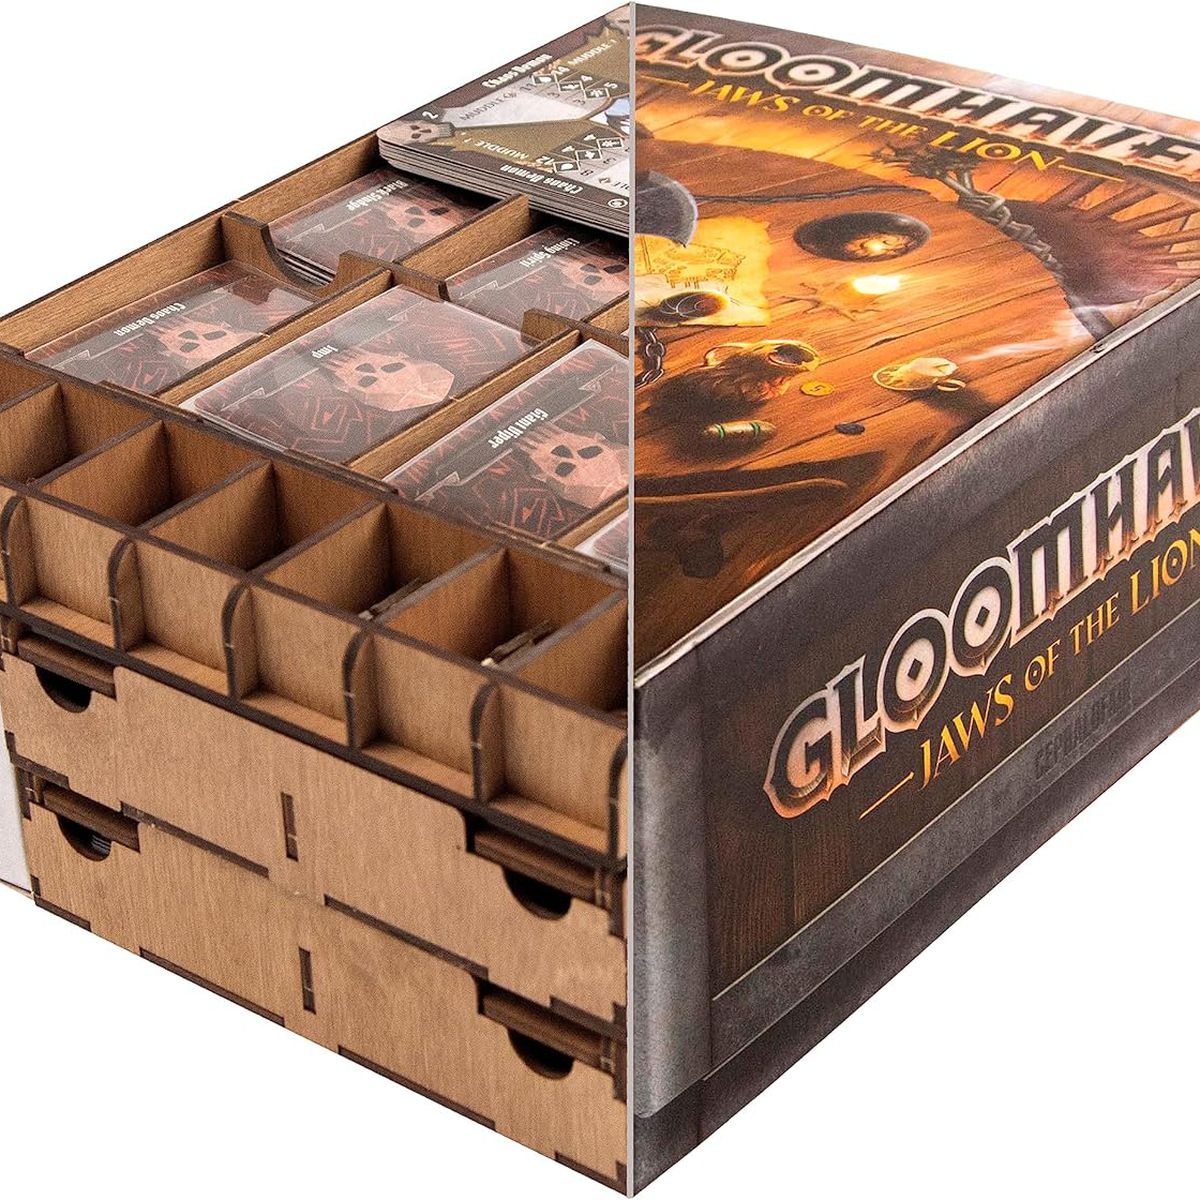 The box for Smonex’s Gloomhaven organizer.